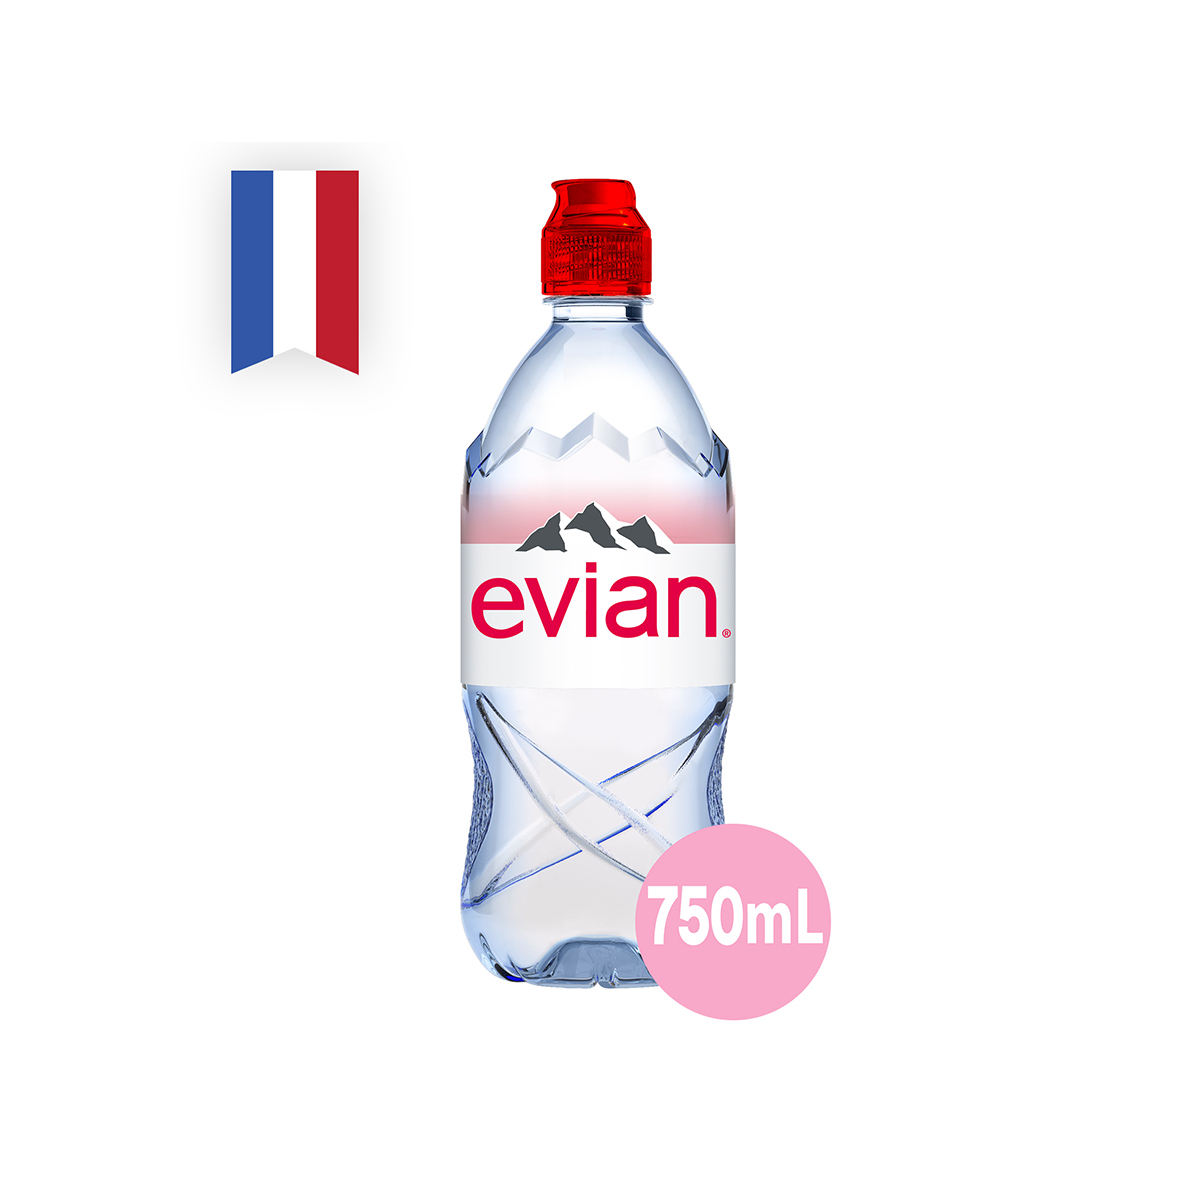 EVIAN Natural Mineral Water – Rebirth 750ml – Federated Distributors, Inc.